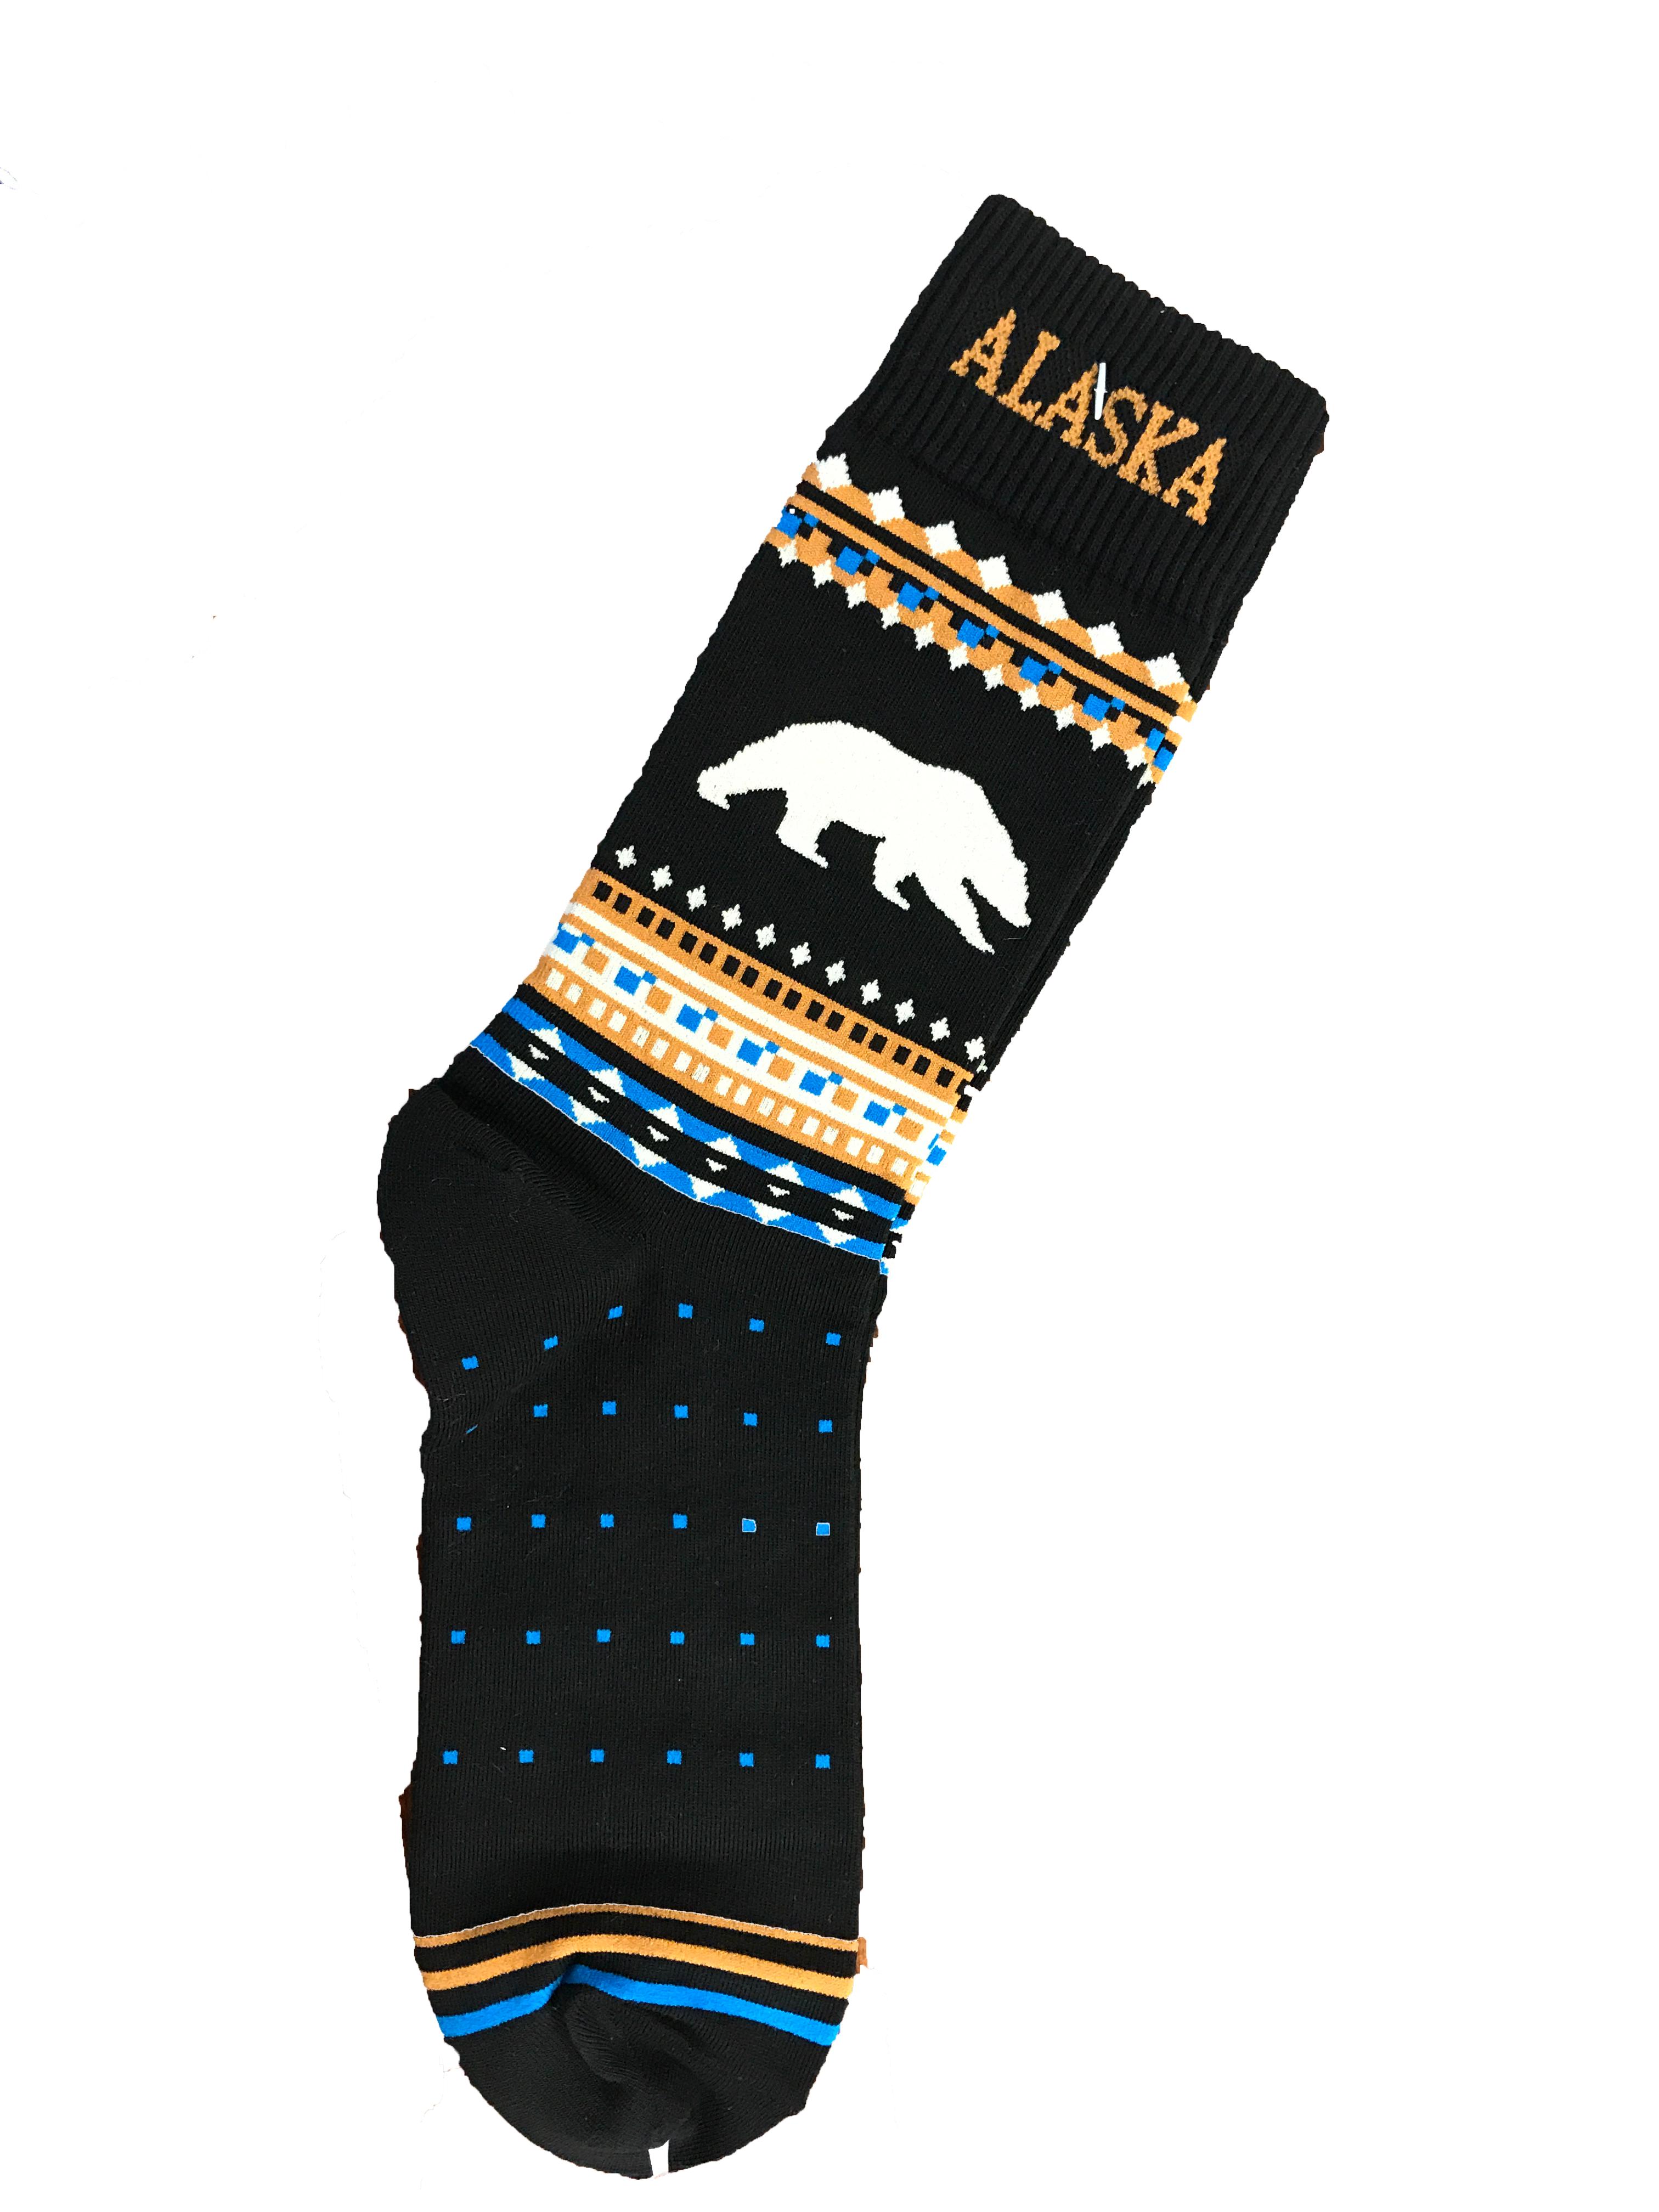 adult sizes 9-12 Towel socks Alaska Themed Thick and Warm Bear Socks 